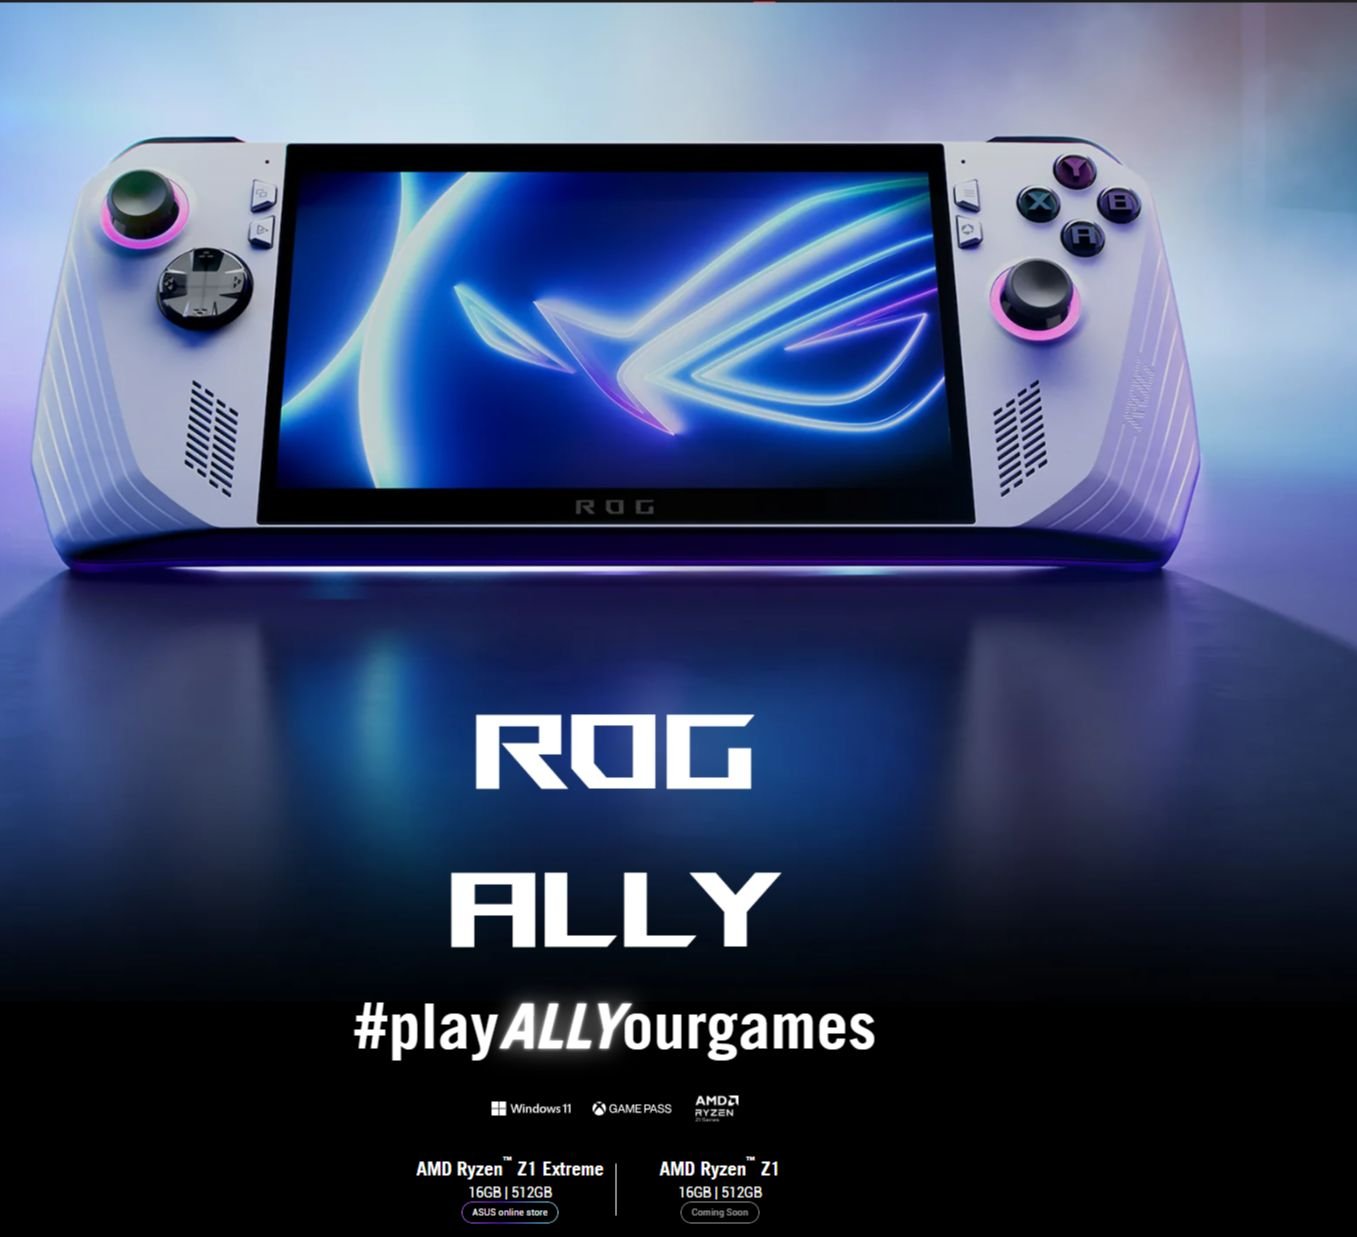 Asus ROG Ally (Z1 Extreme) review: Still a killer handheld, rog